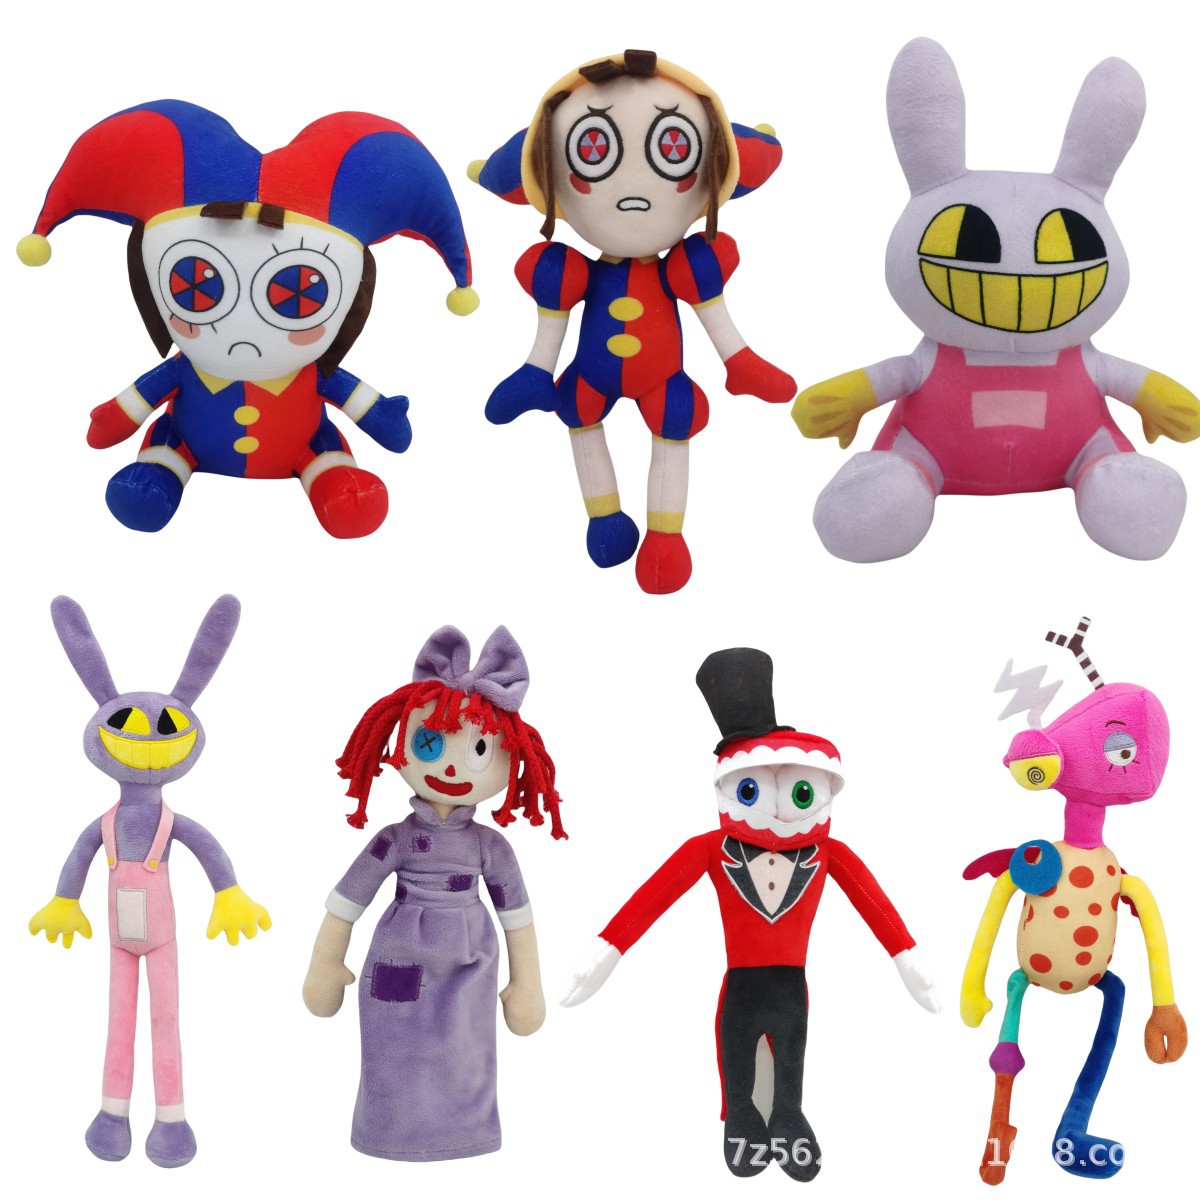 The Amazing Digital Circus Plush, 11.2 Digital Circus Plush Toys, Pomni  And Jax Stuffed Animal Plushie Doll Gift For Kids & Fans (pomni)